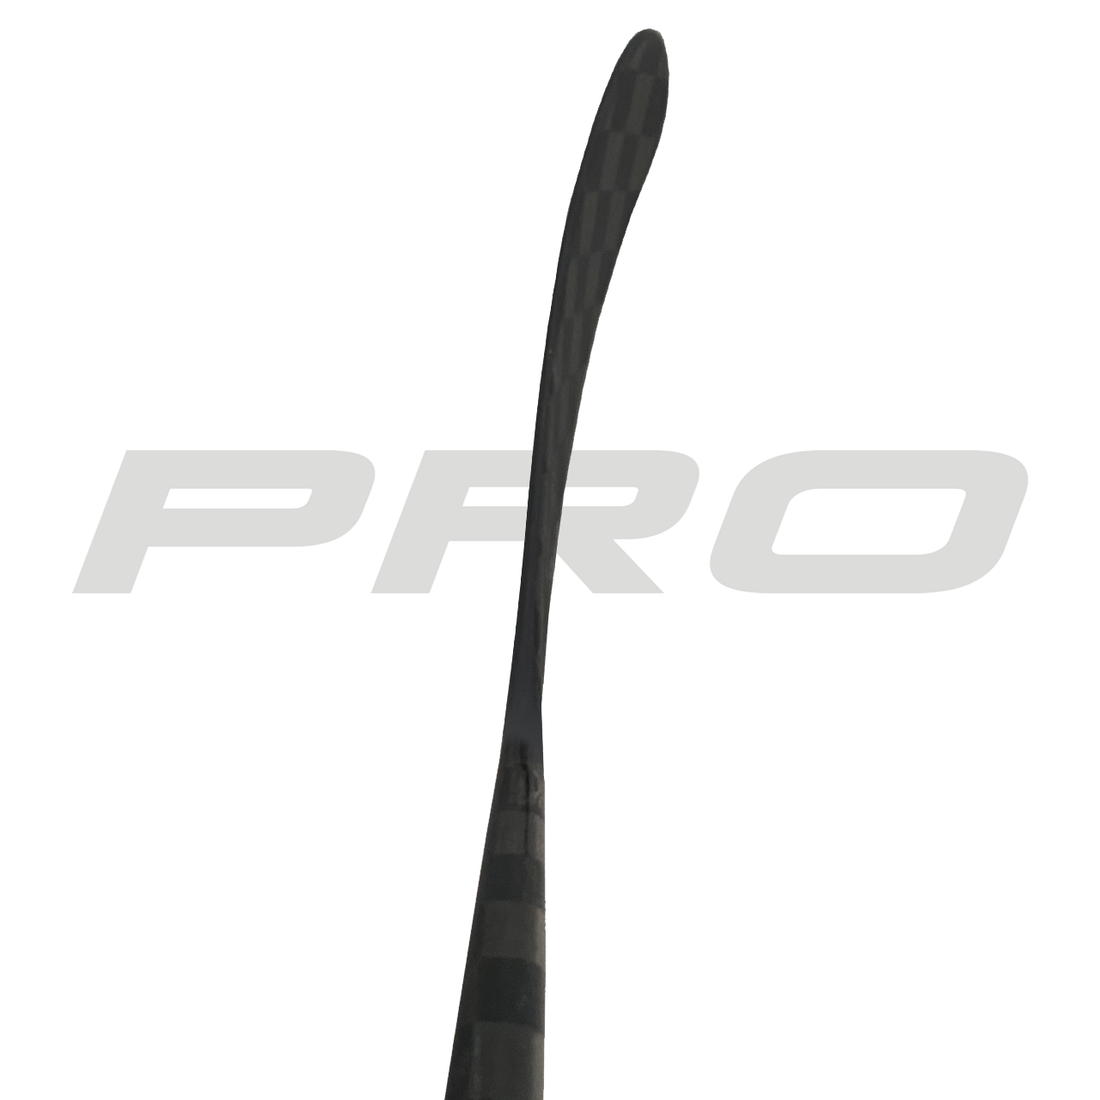 PRO1616 (ST: Barkov Pro) - Third Line (425 G) - Pro Stock Hockey Stick - Left